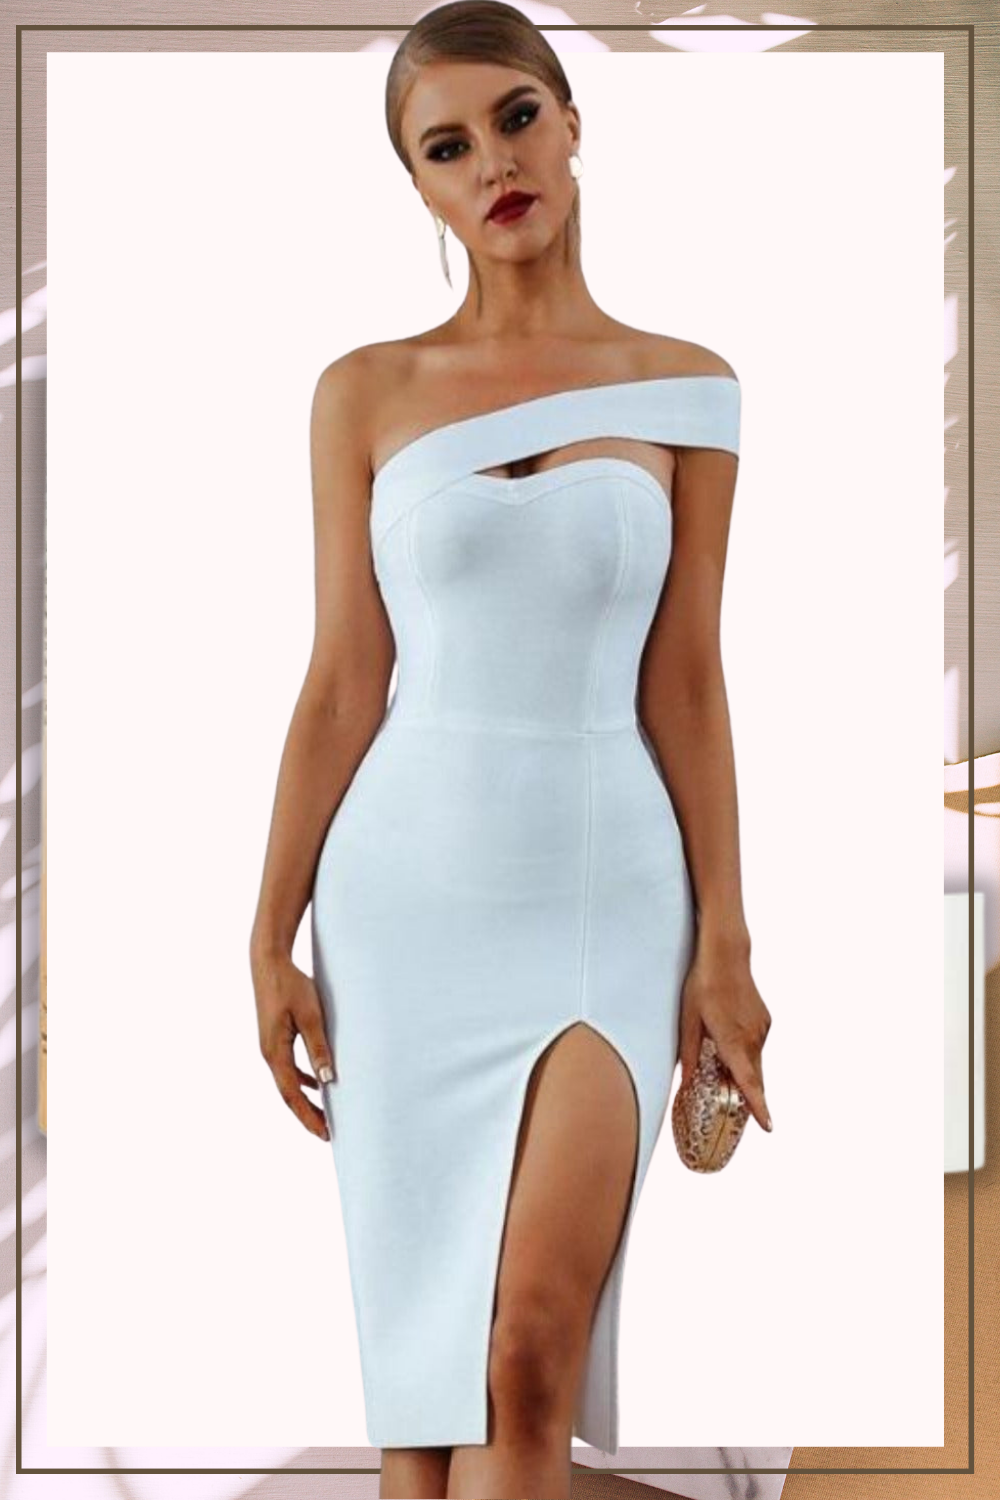 Delicate Diva High Slit Off The Shoulder White Bodycon Midi dress Rose’Mon Retail